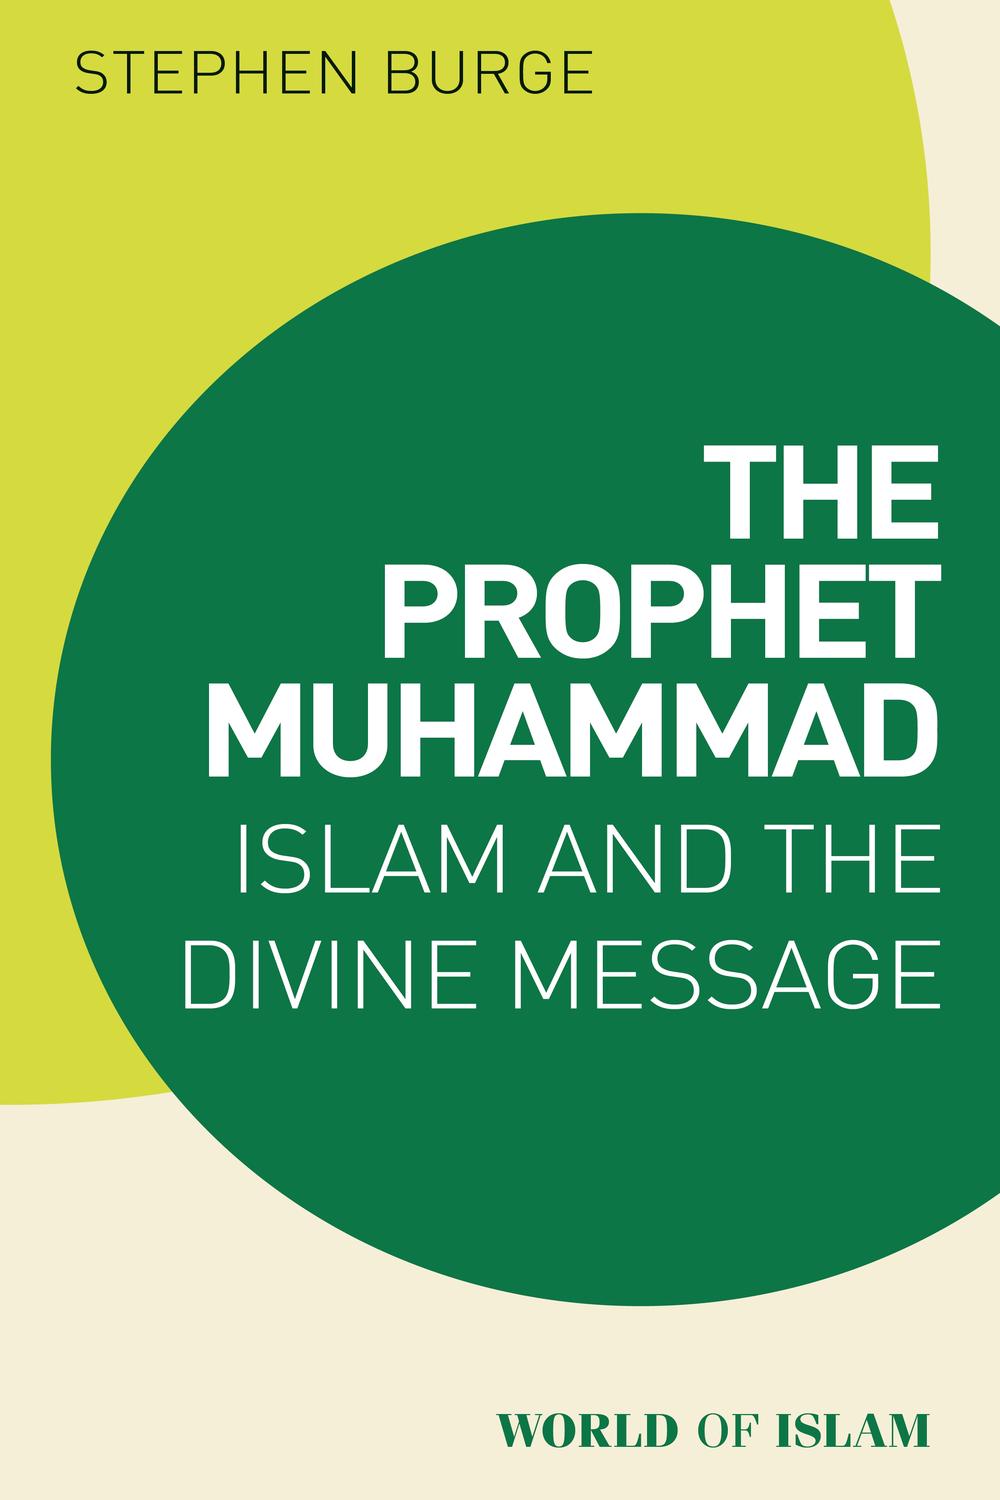 The Prophet Muhammad - Stephen Burge